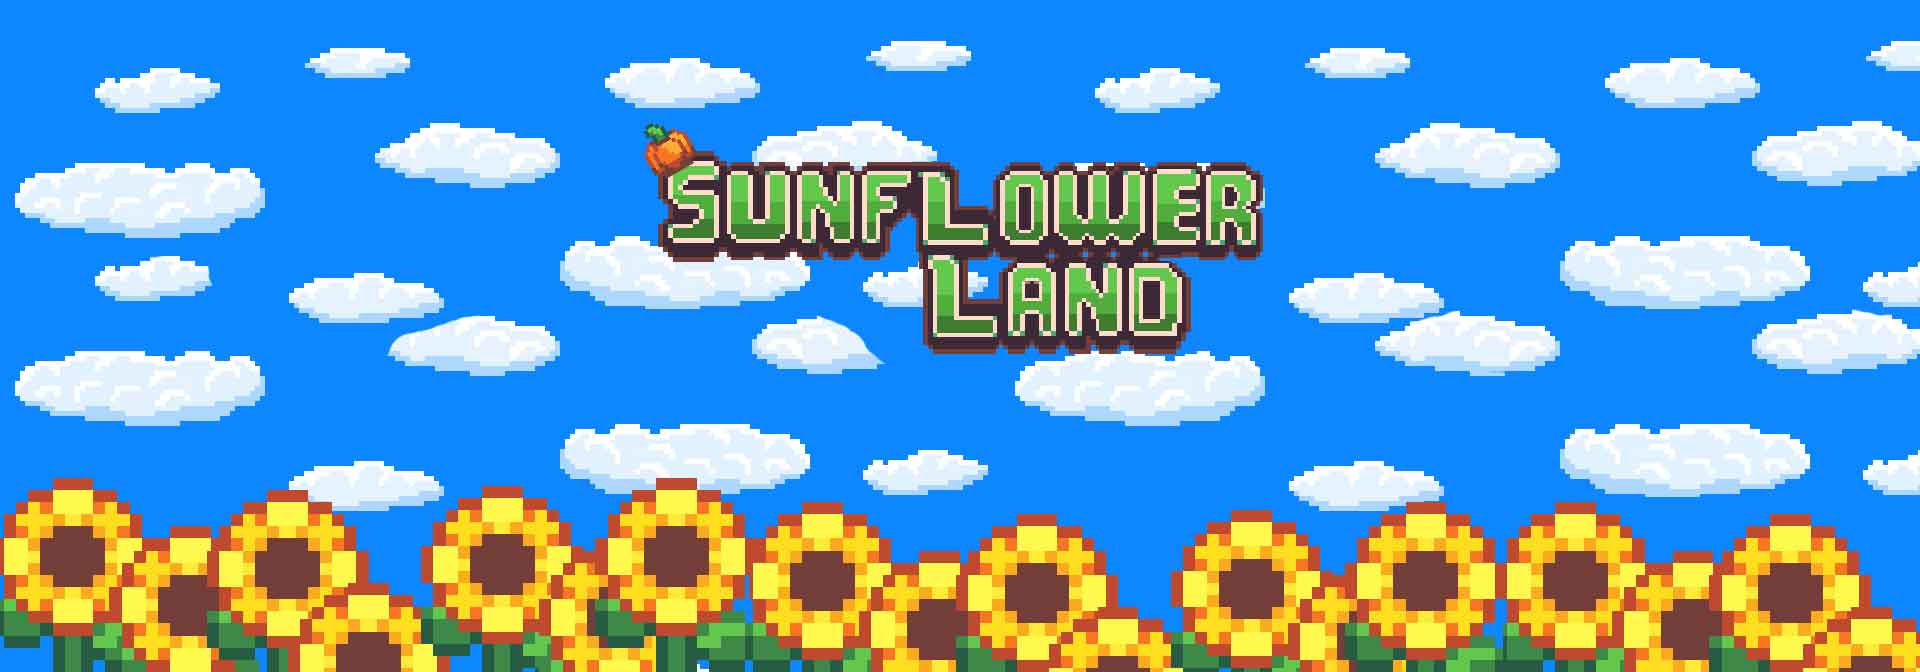 Sunflower Land Banner